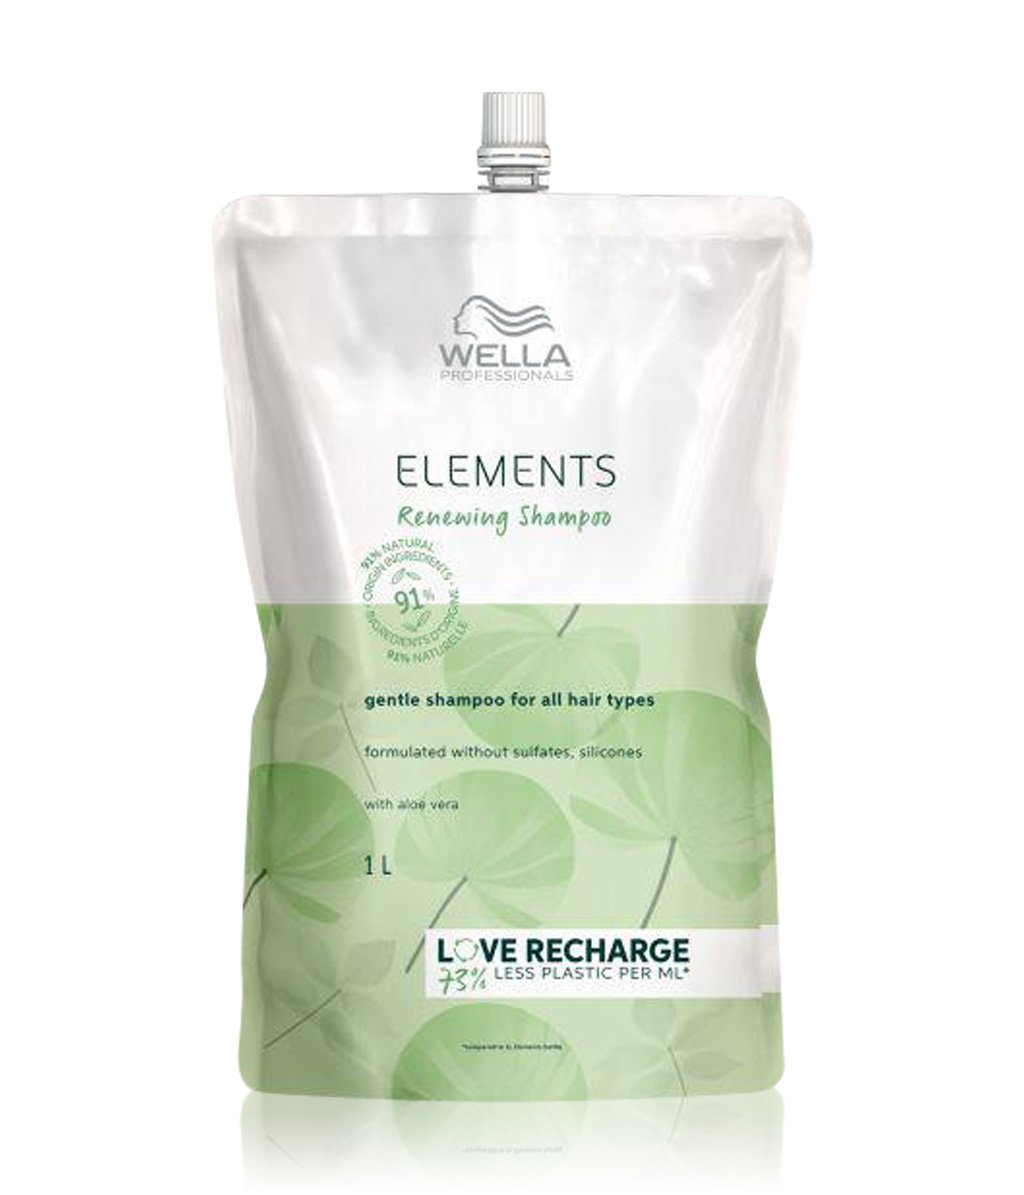 Wella Professionals New Elements Renewing Shampoo Refill 1000ml